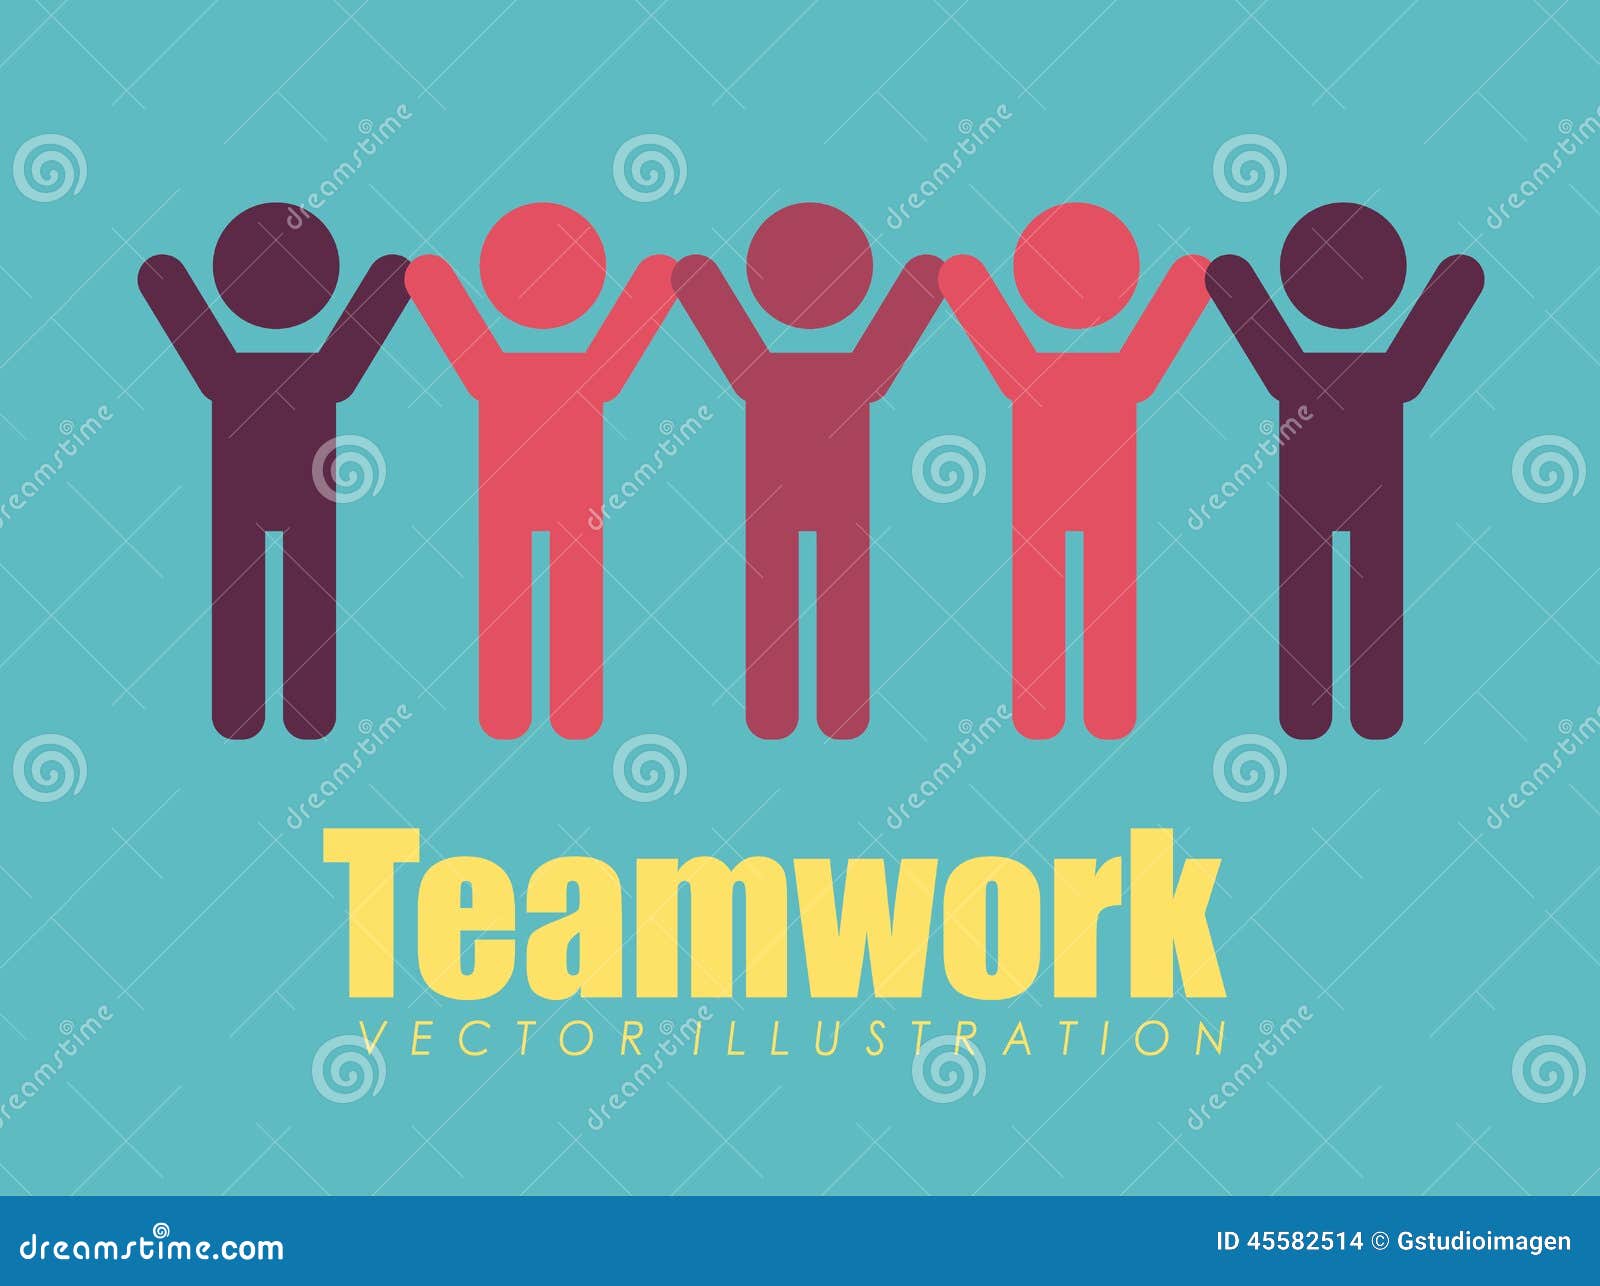 Teamwork design stock vector. Illustration of hands, network - 45582514